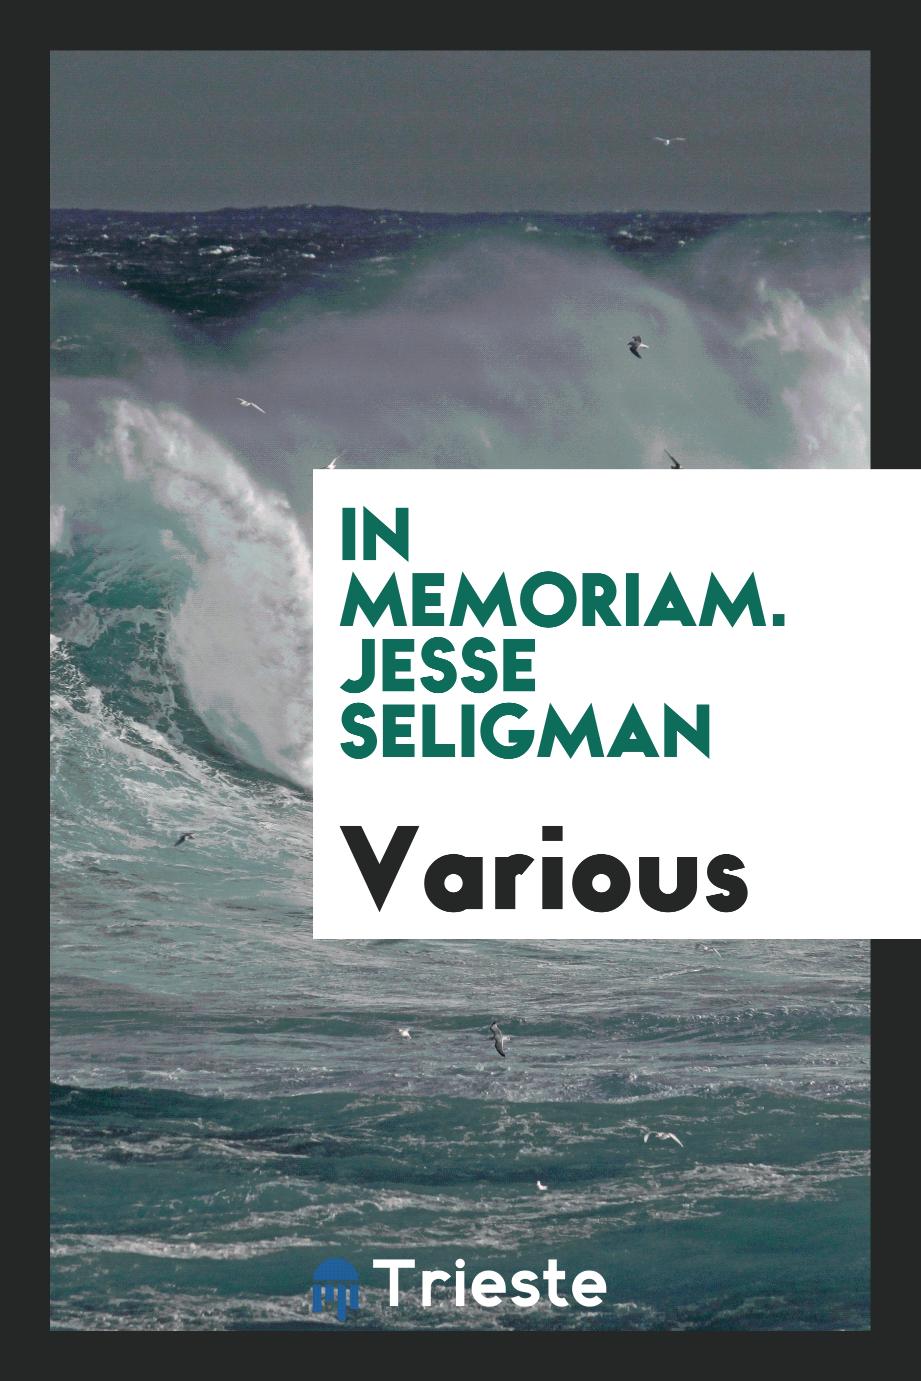 In memoriam. Jesse Seligman